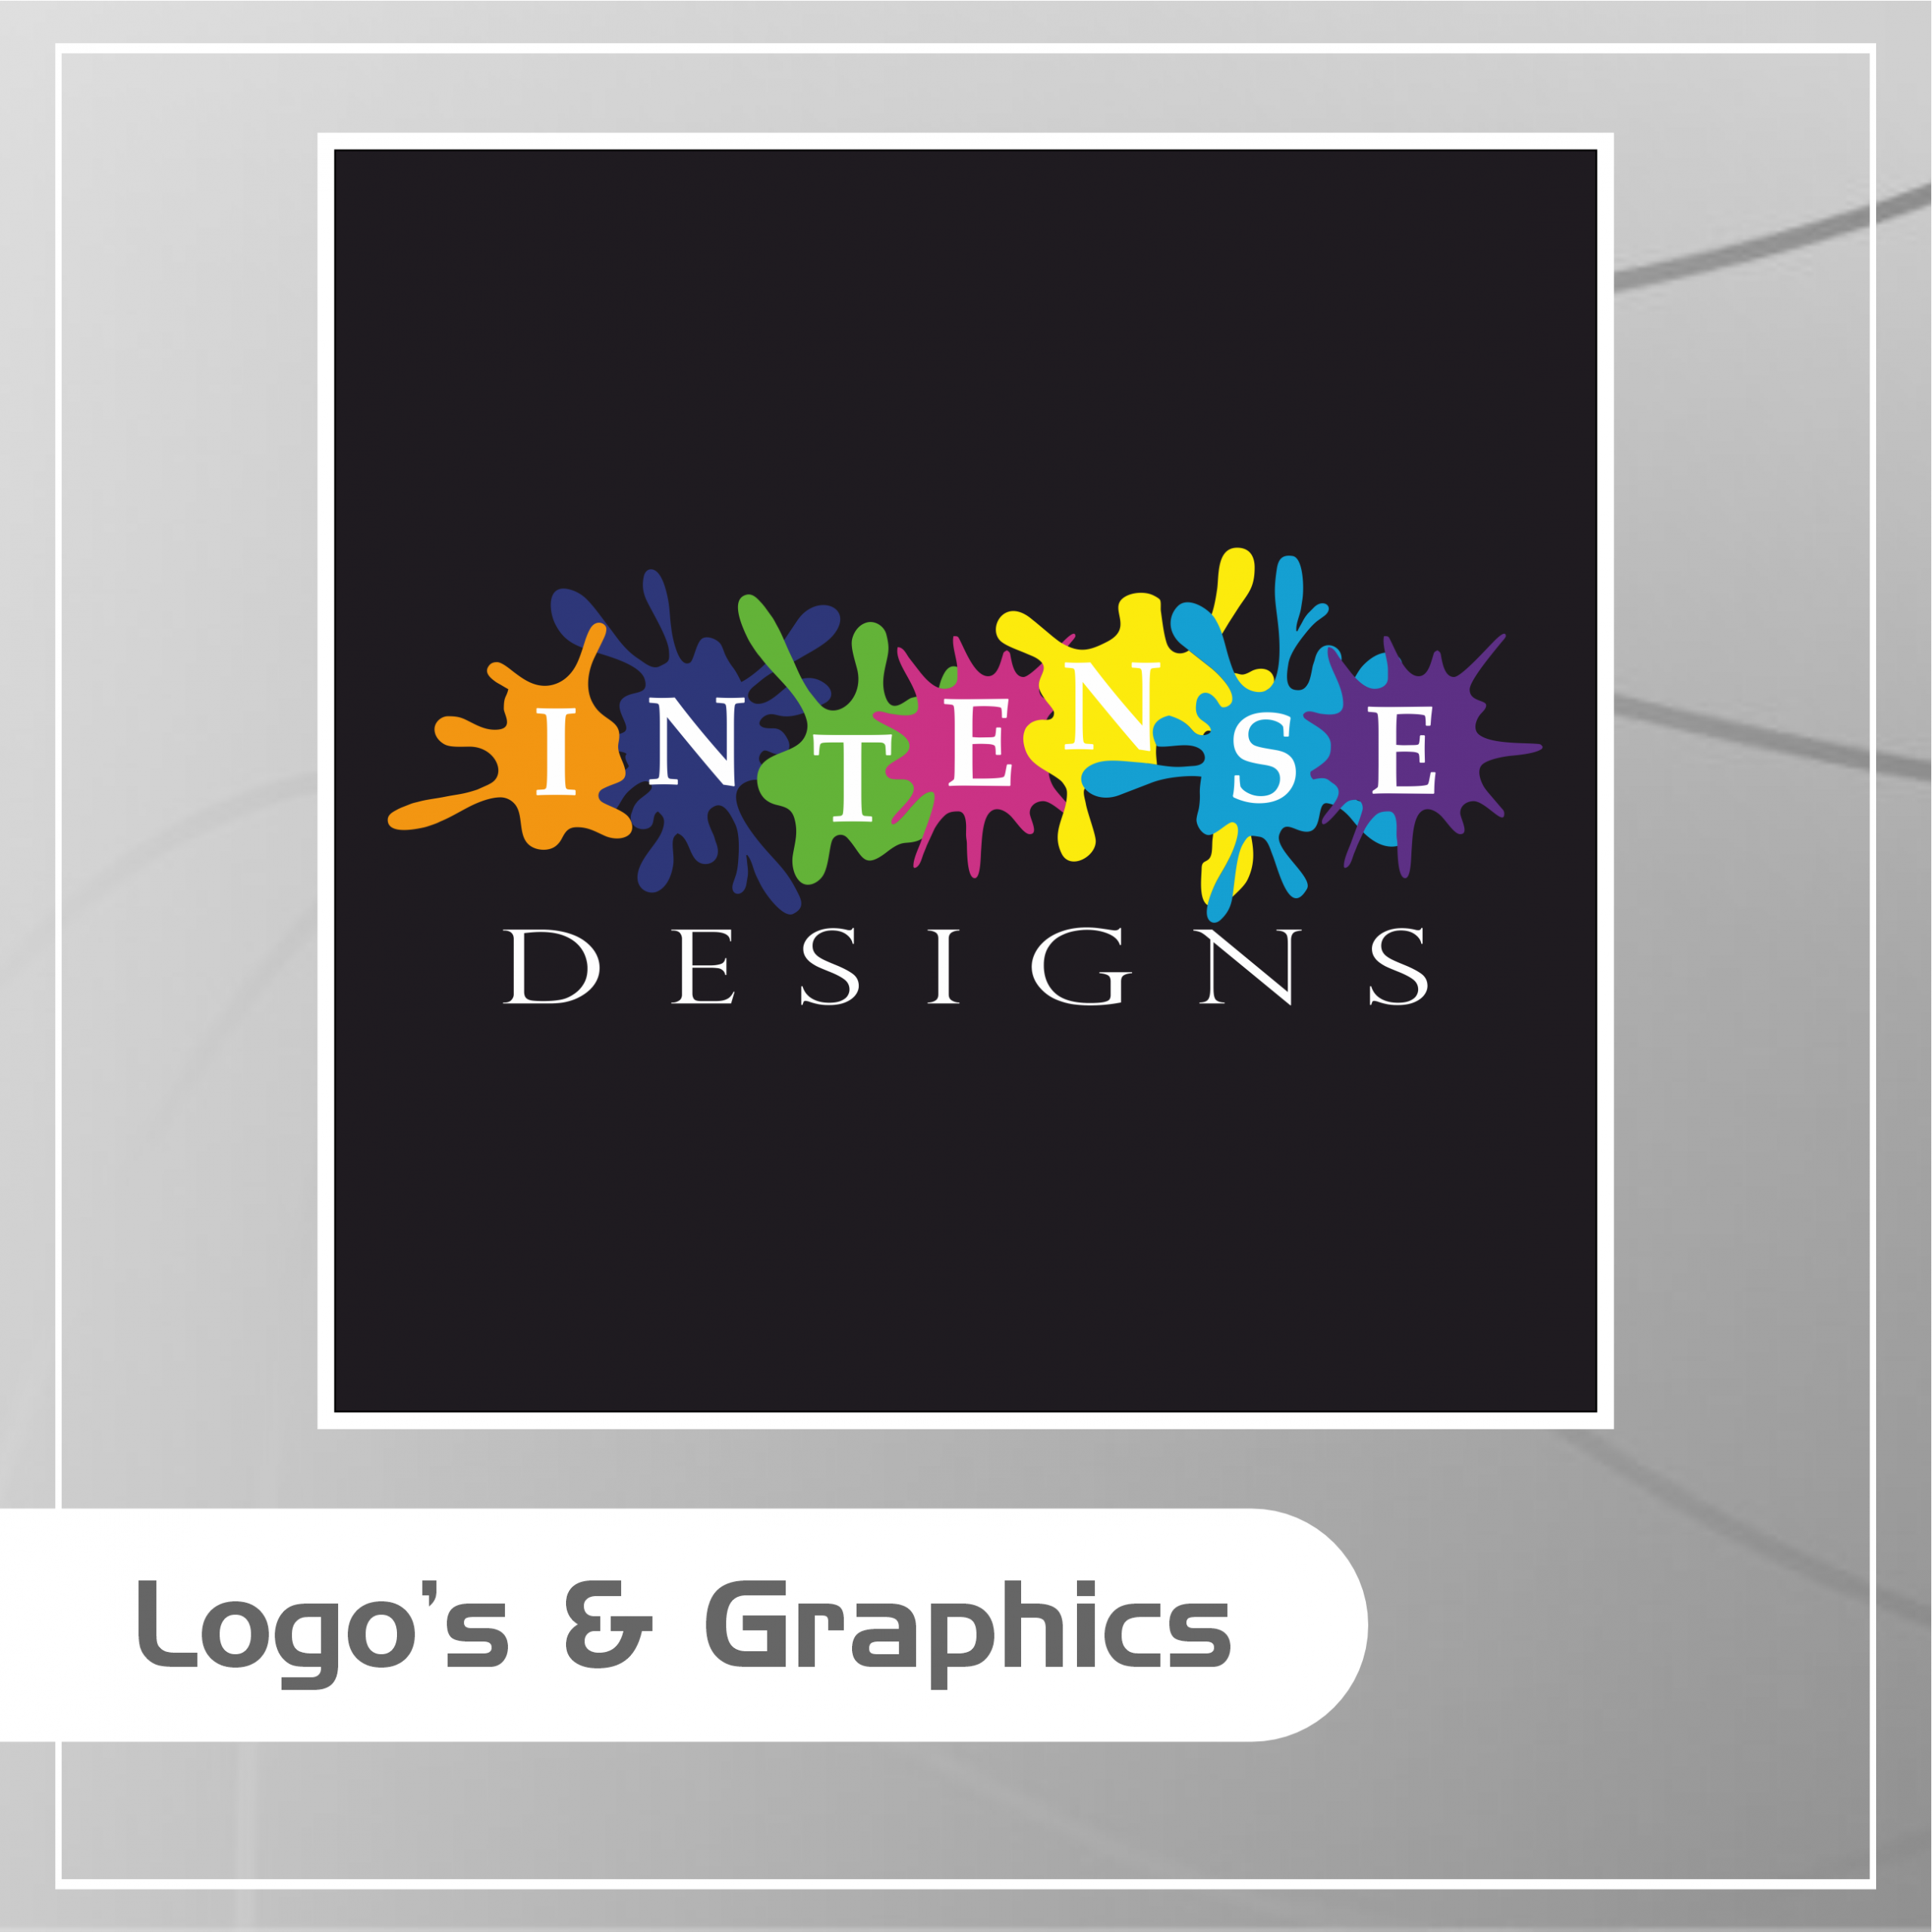 Logos & Grpahics